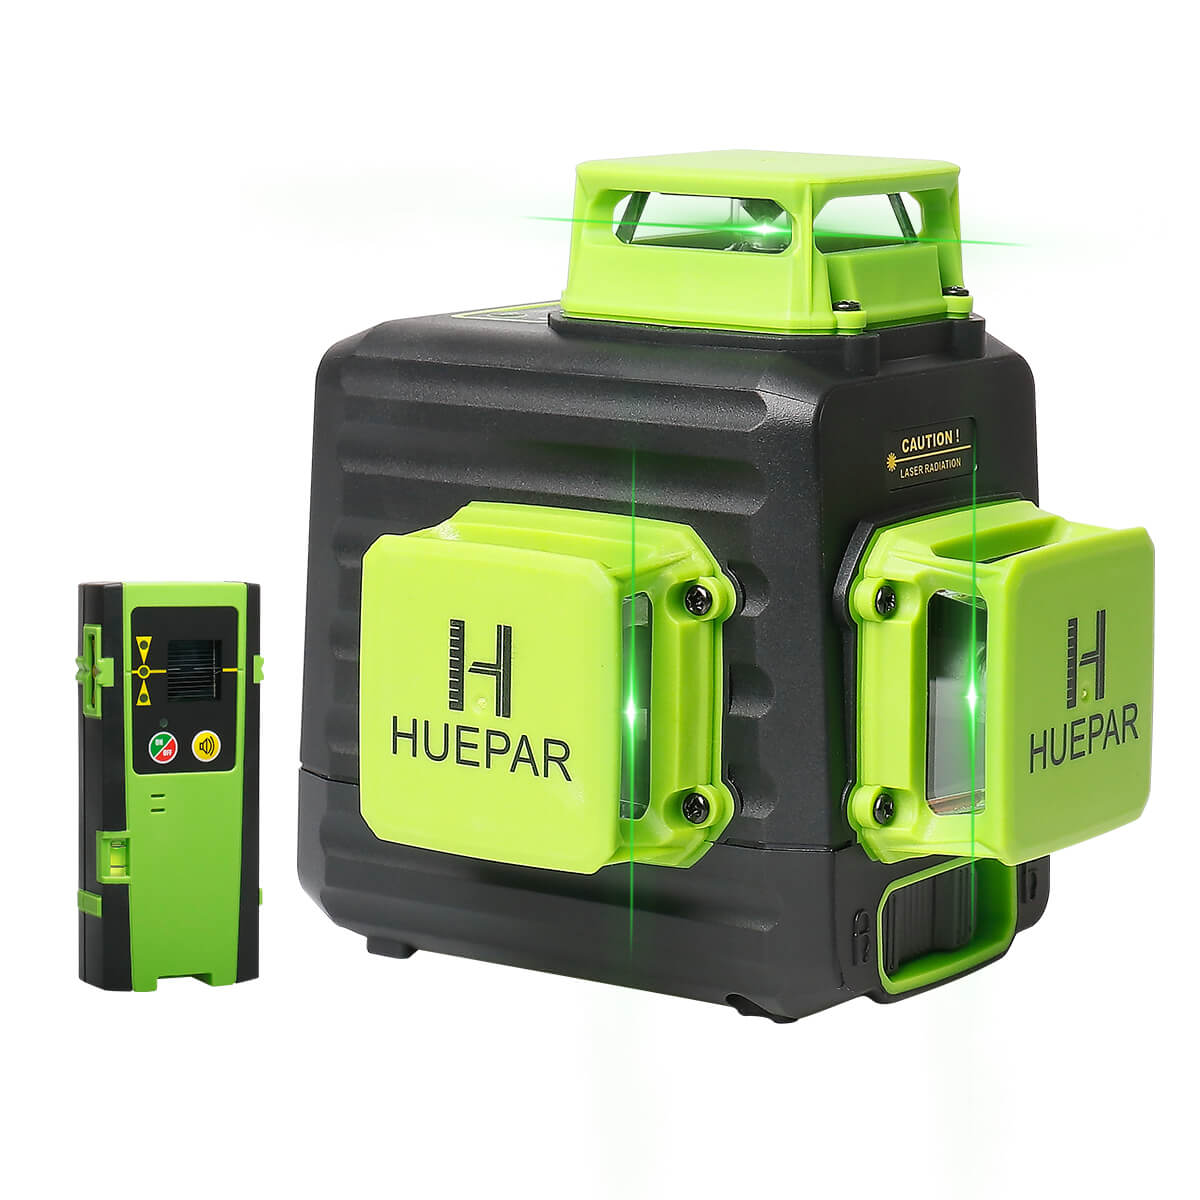 Huepar B03CG HUEPAR CA - Laser Level